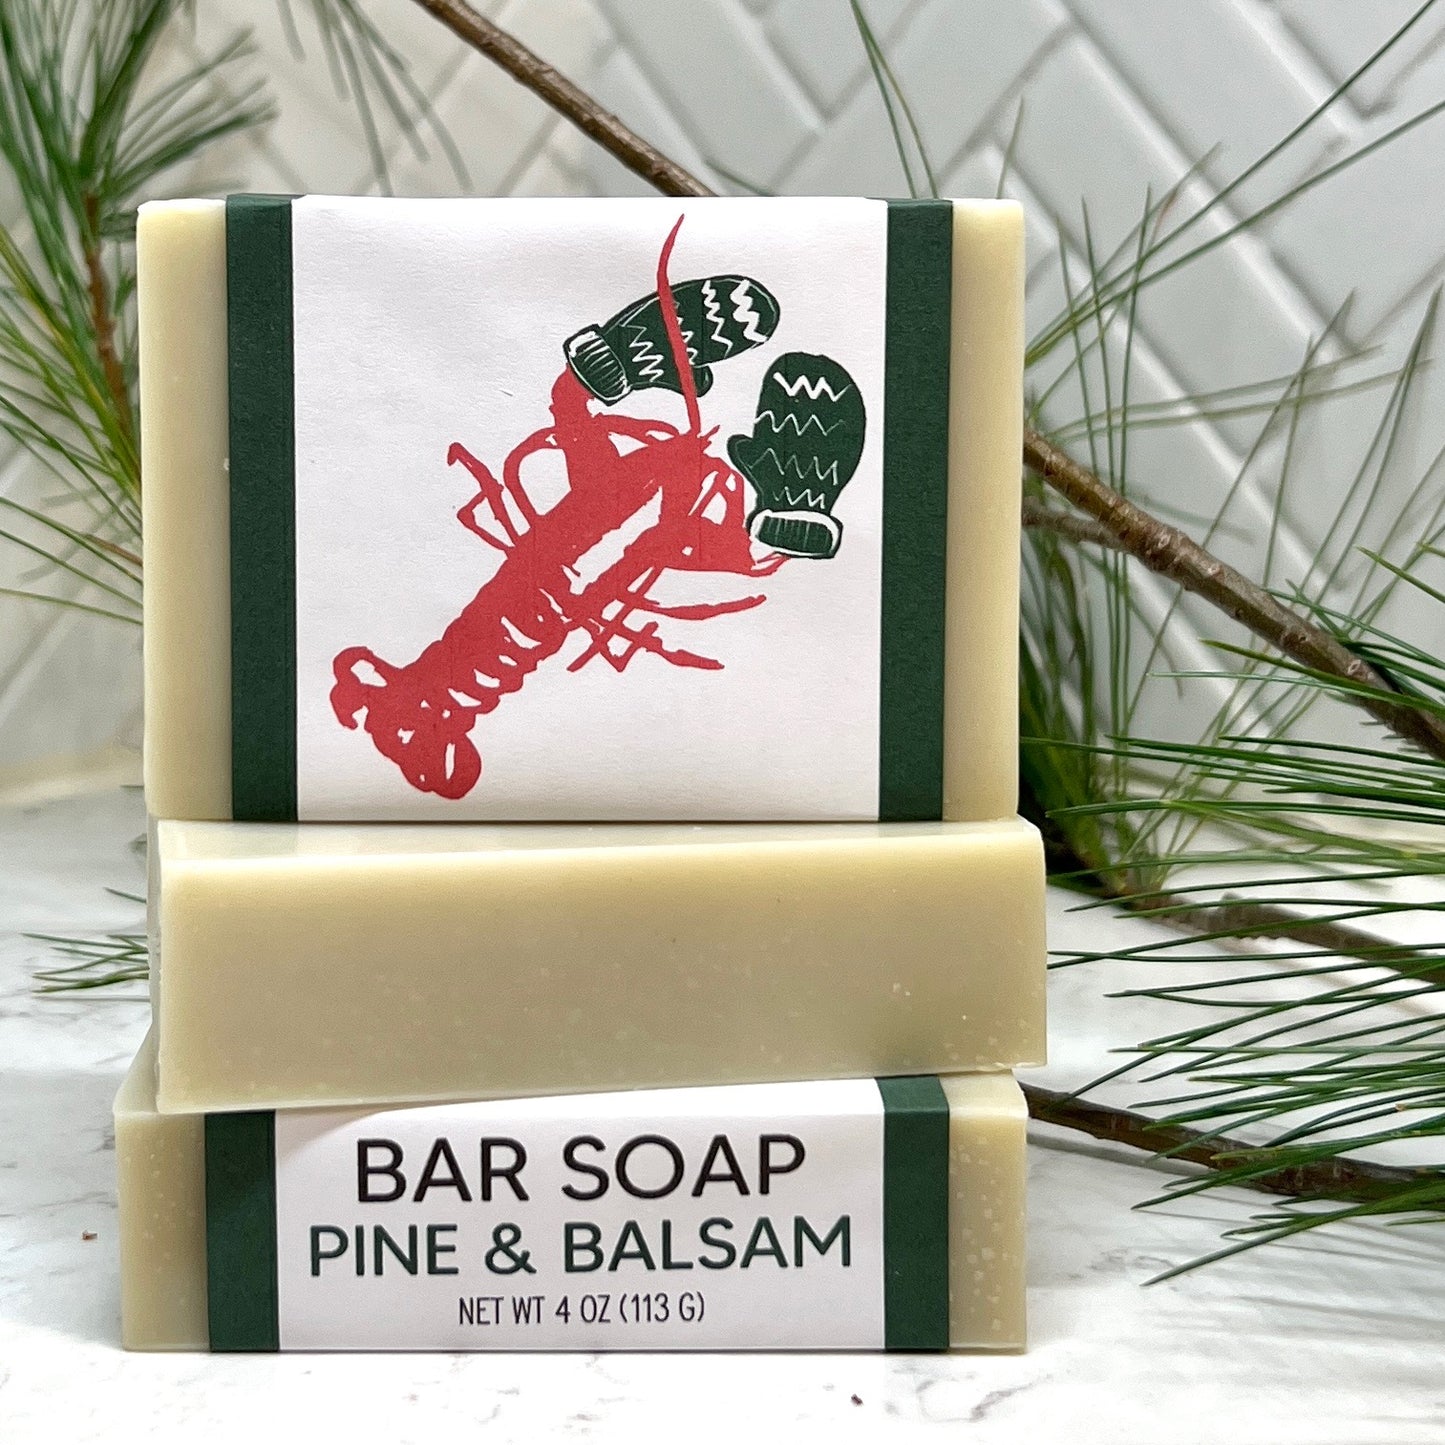 BAR SOAP - PINE & BALSAM